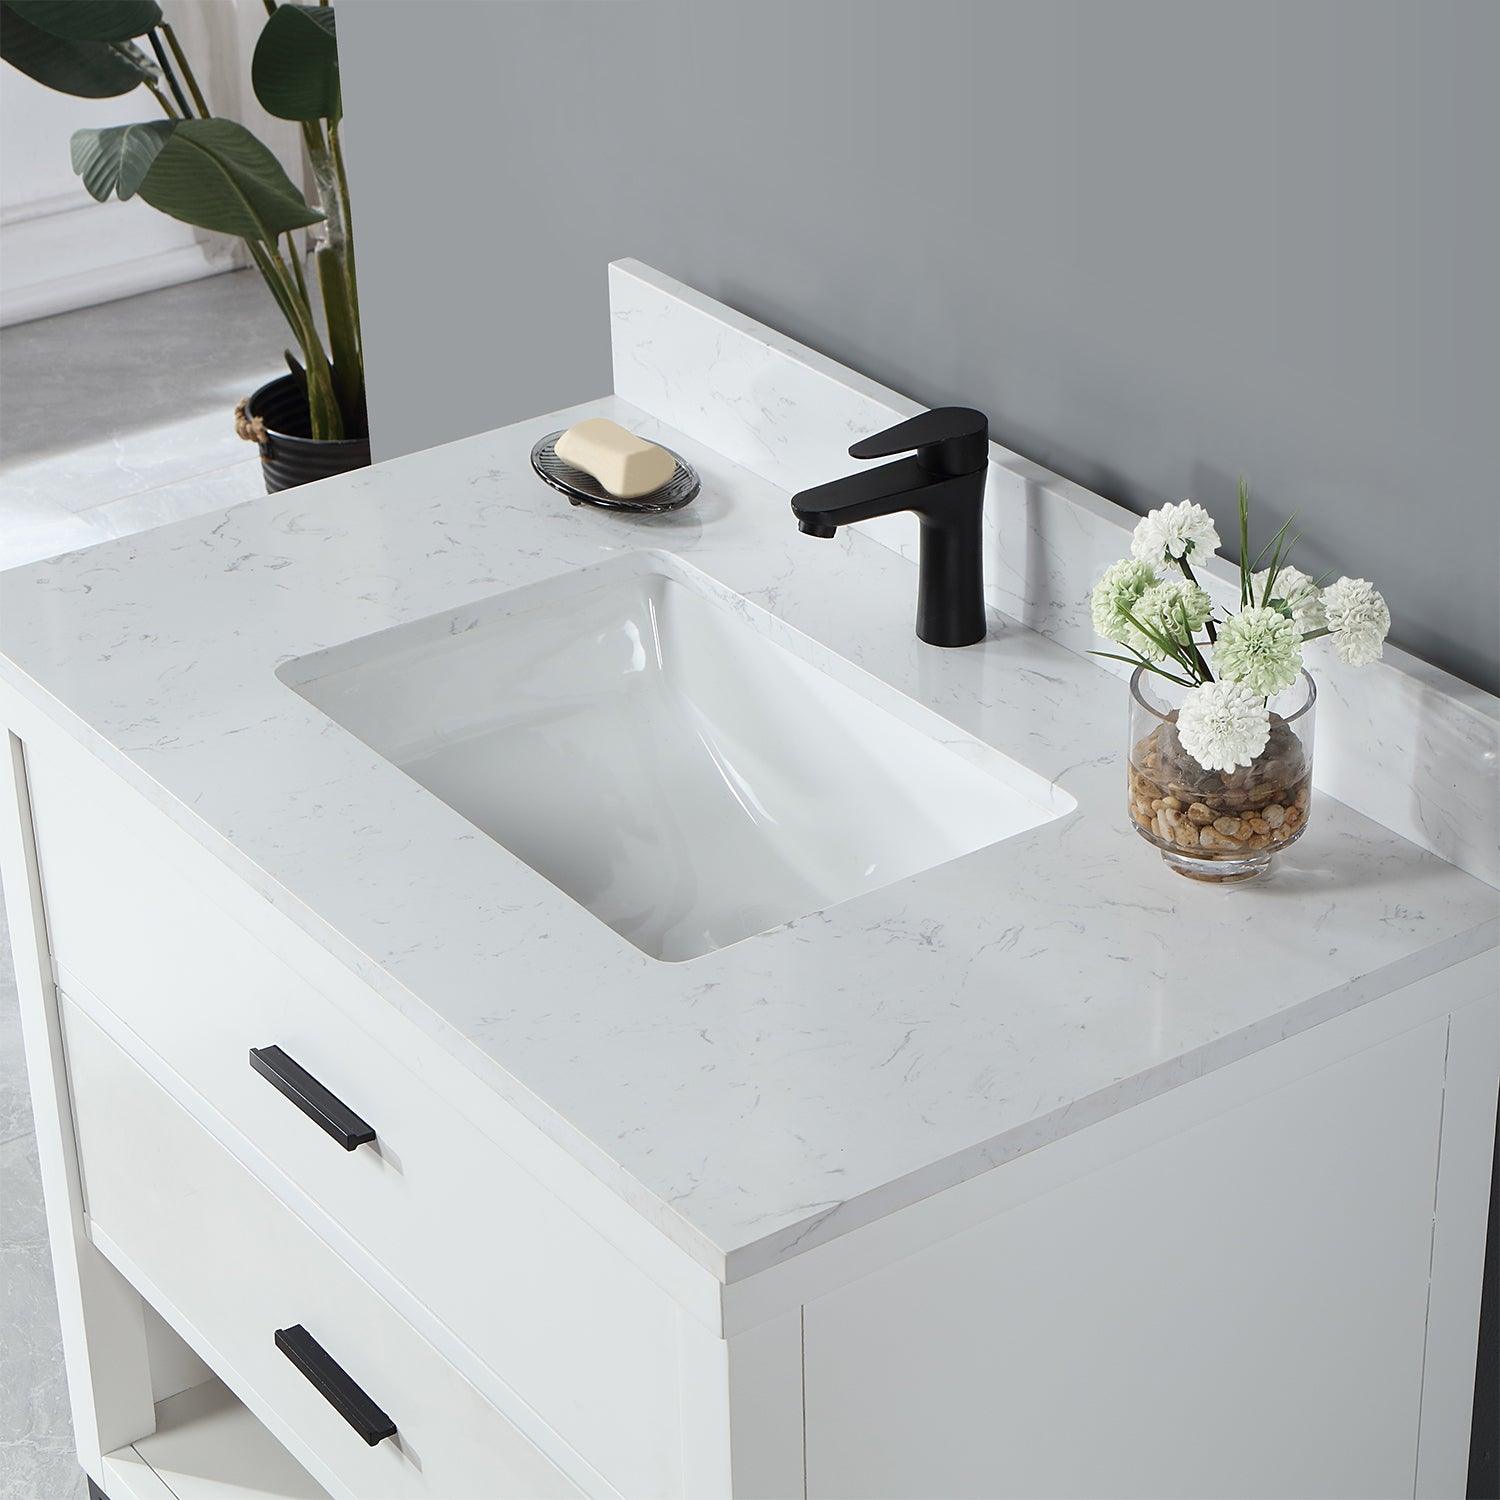 
  
  Altair Kesia Single Bathroom Vanity Set with Carrara White Composite Stone Countertop, Optional Mirror
  
